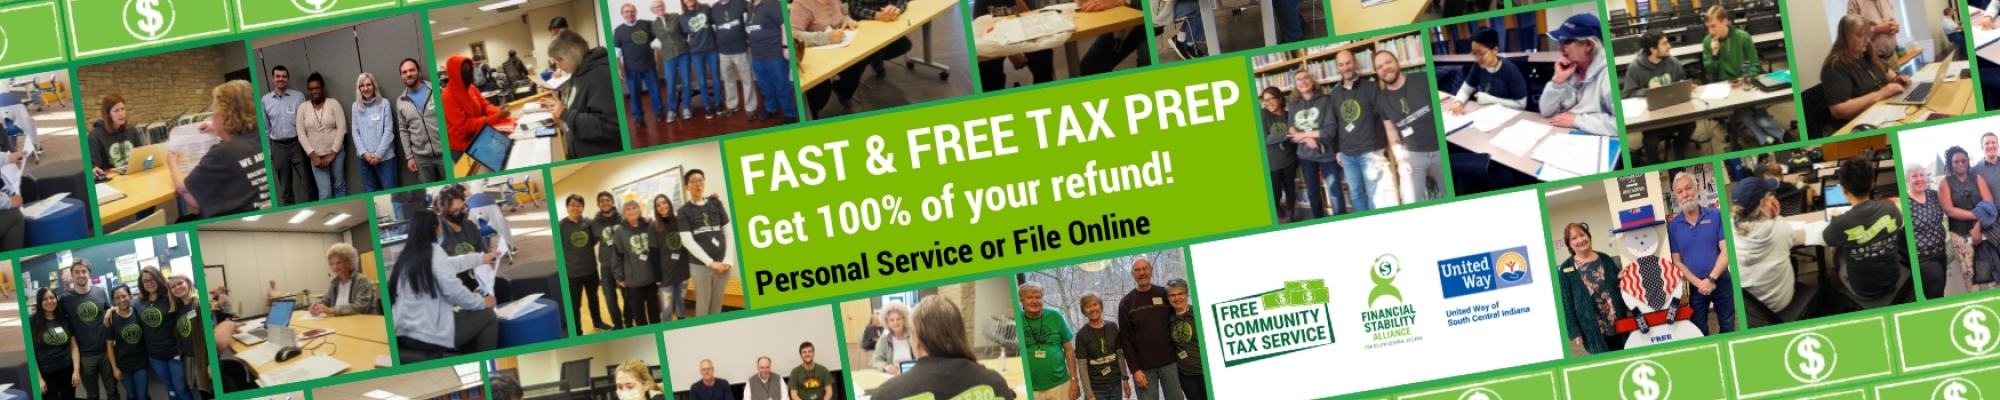 Free Community Tax Service